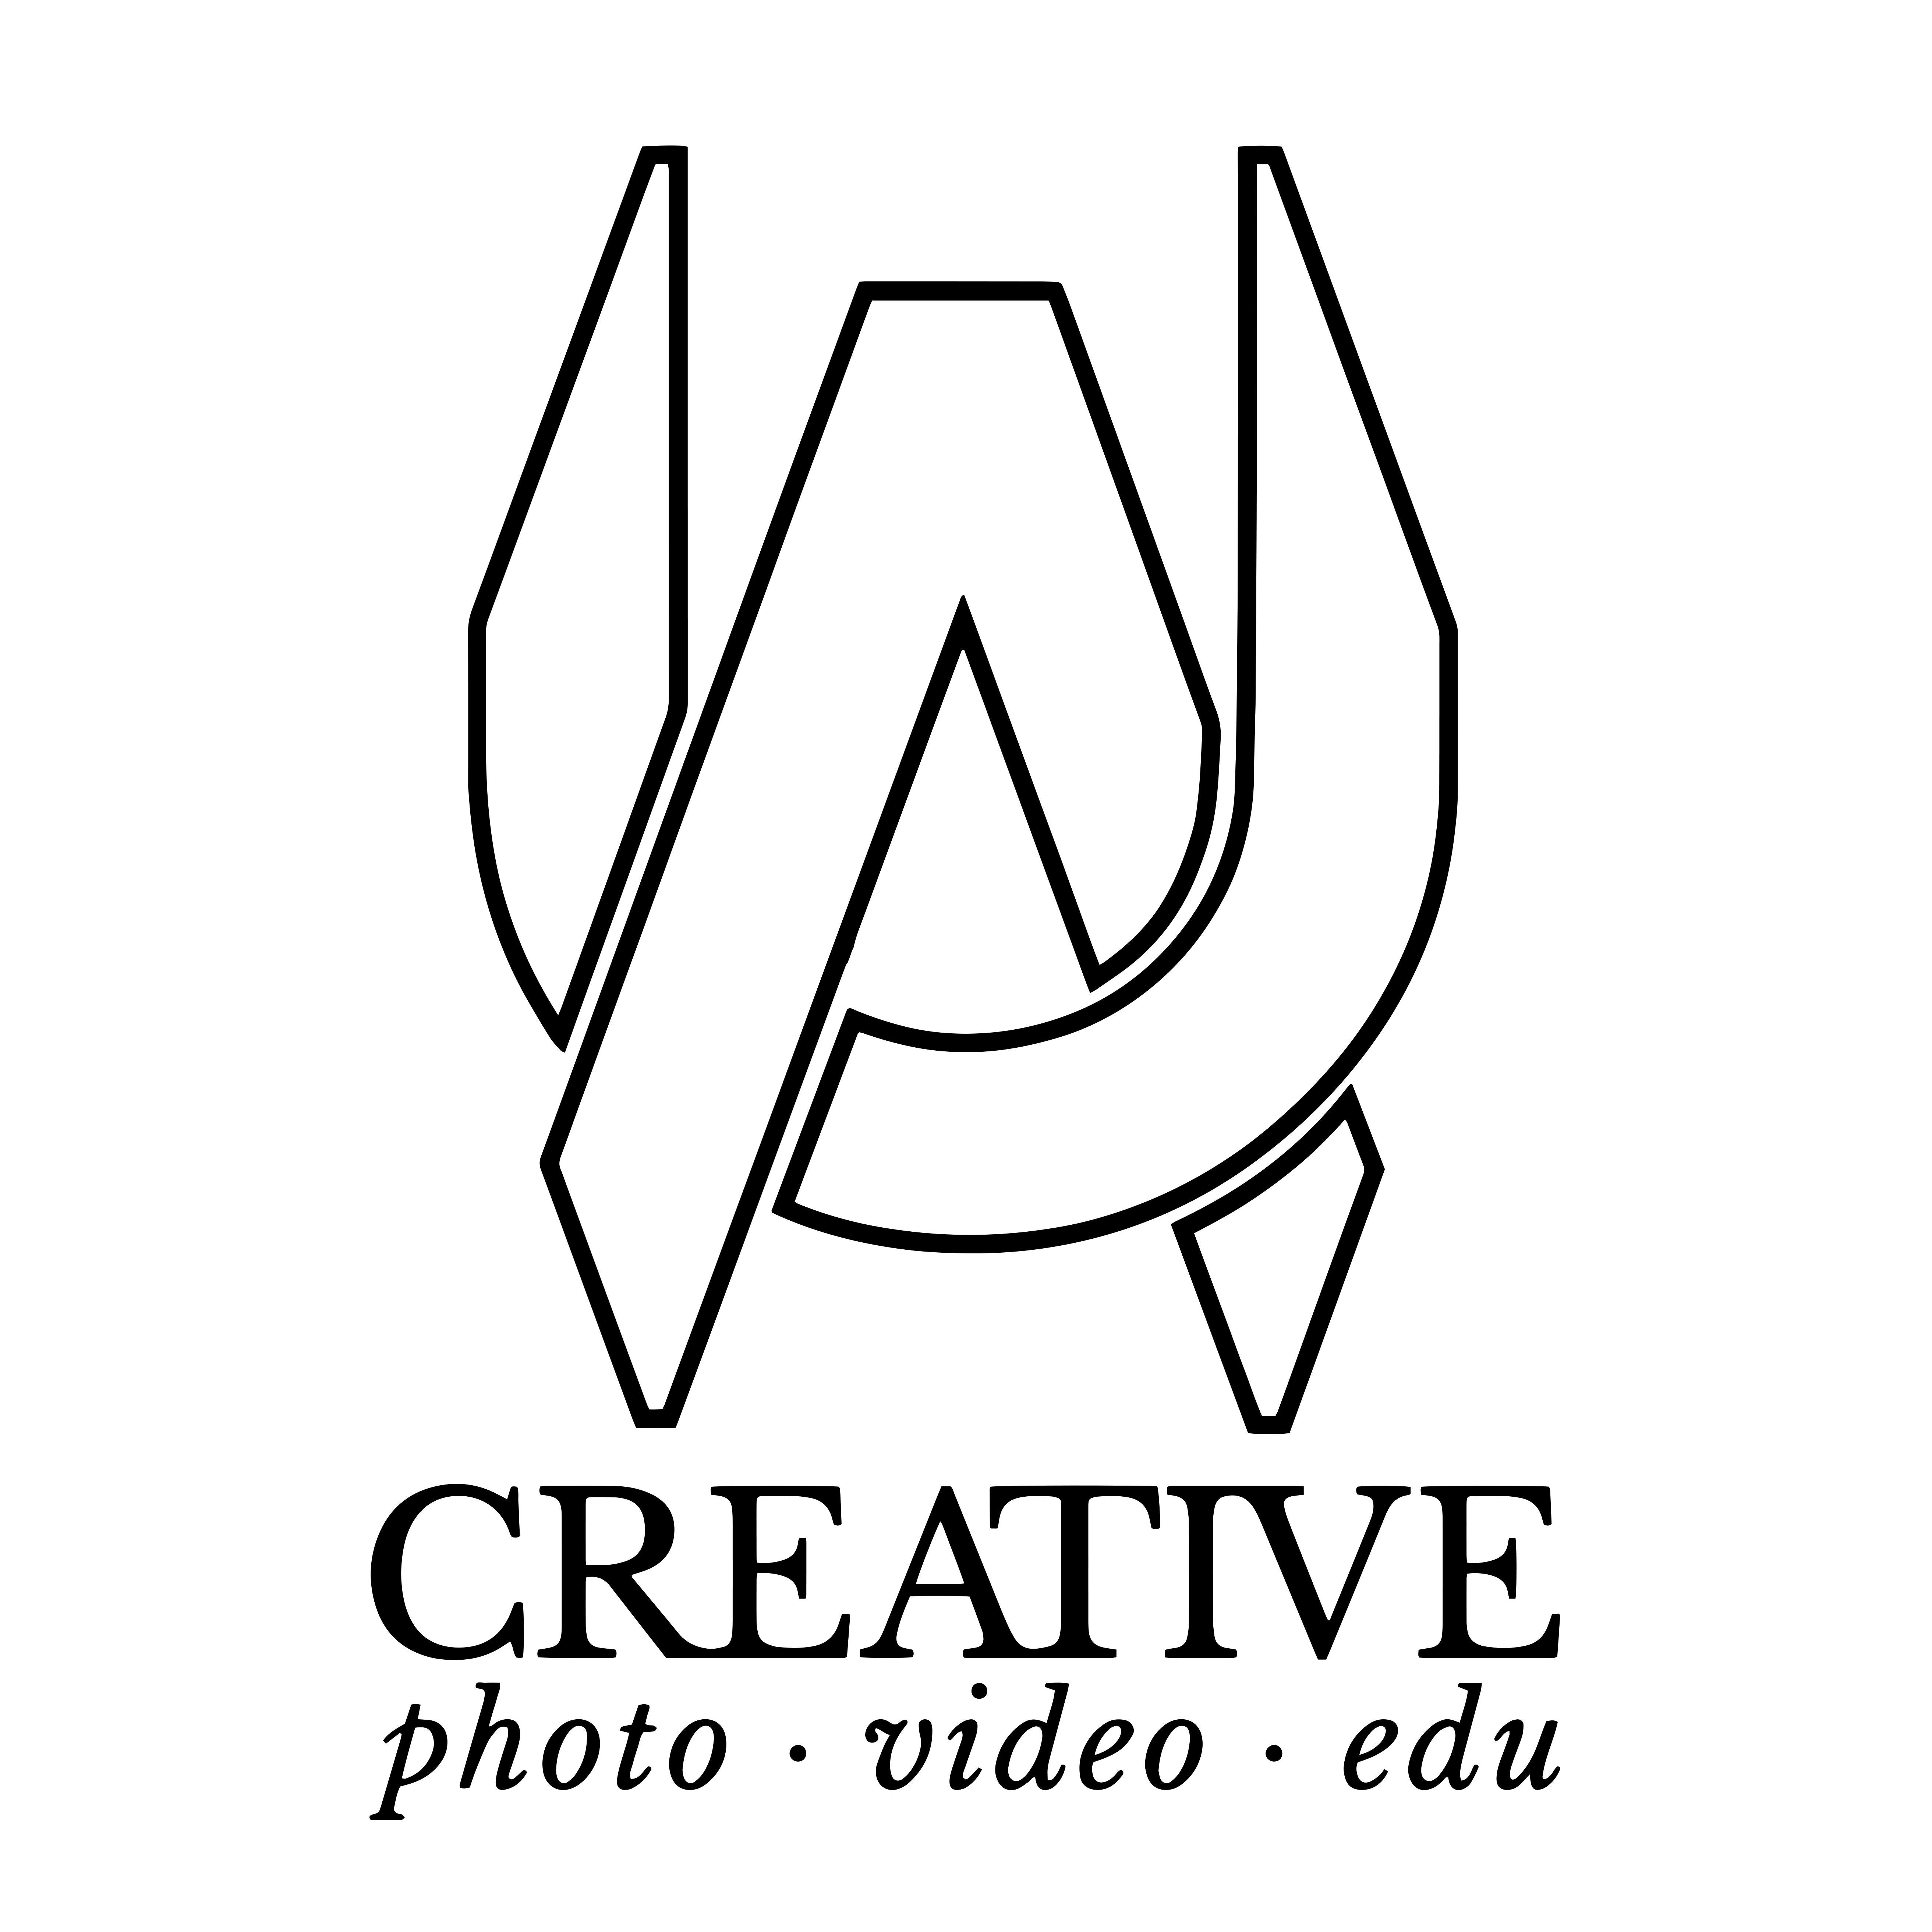 UA Logo - Creative Photography, Video, and Education - UA Creative Studios